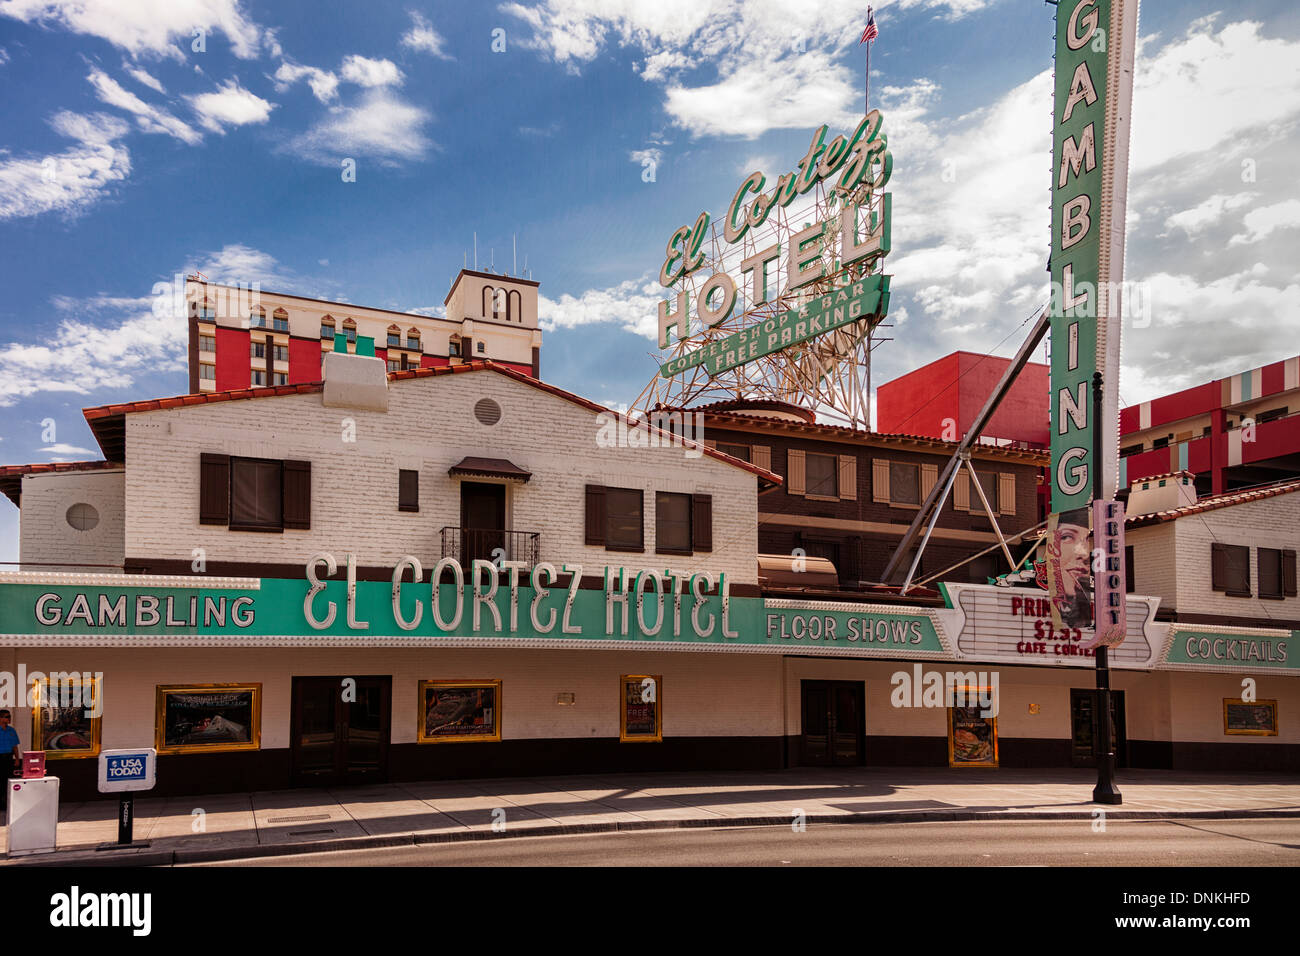 El Cortez Hotel on Fremont street in Downtown Las Vegas,Nevada,USA Stock Photo